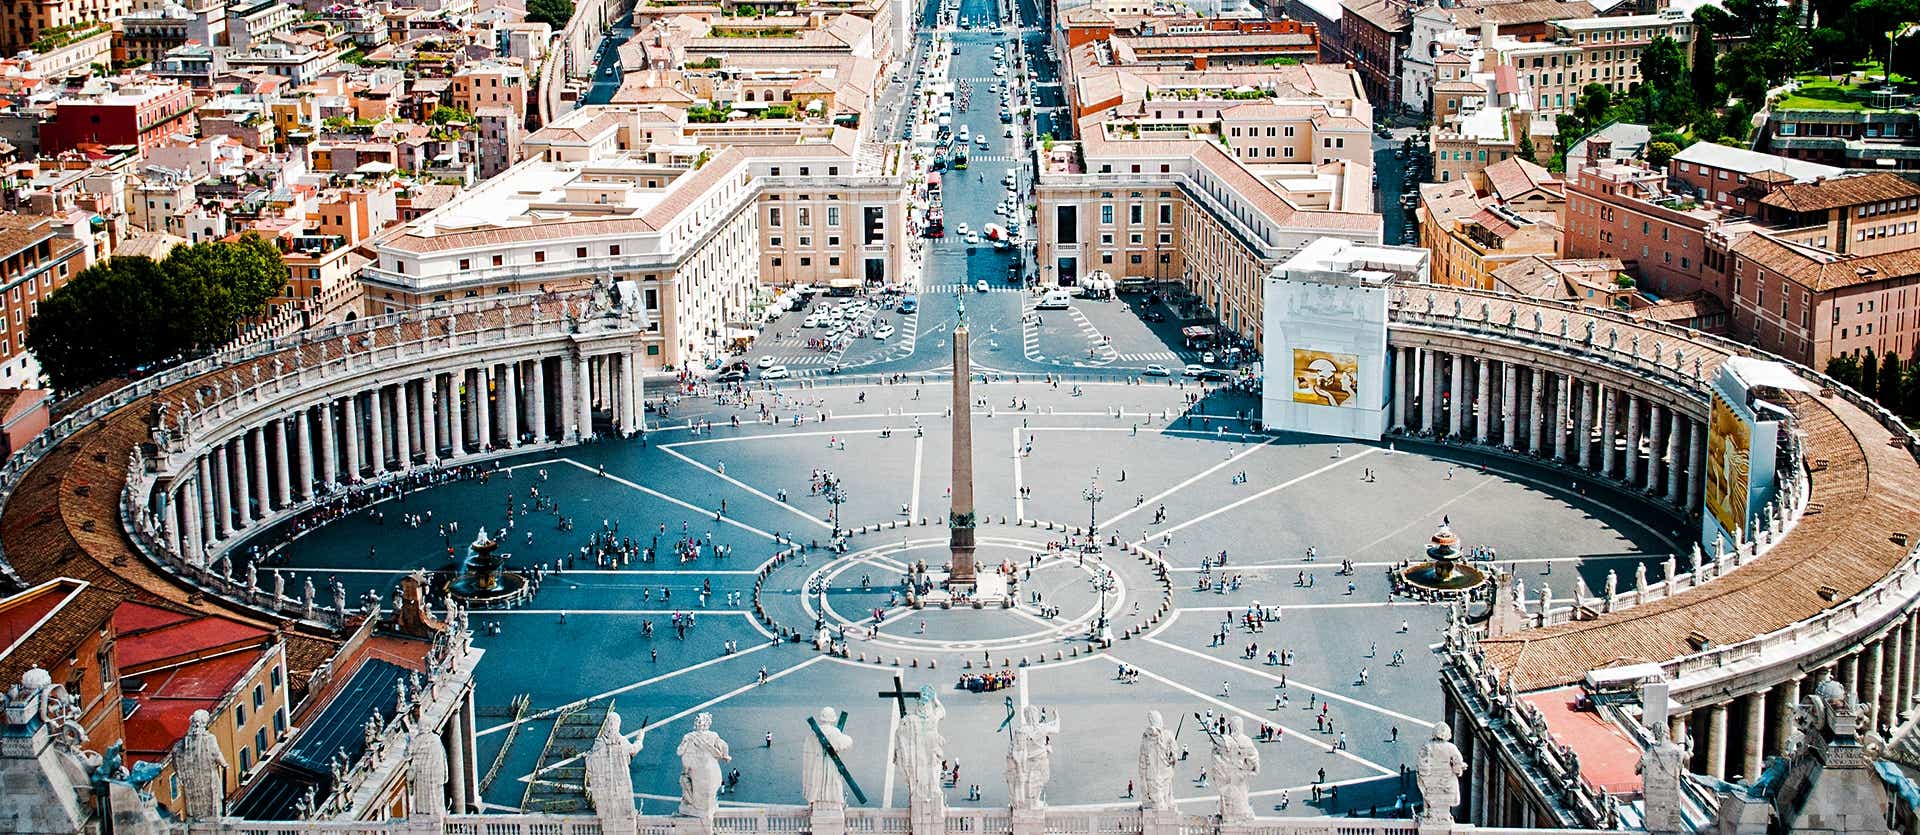 St. Peter's Square <span class="iconos separador"></span> Rome